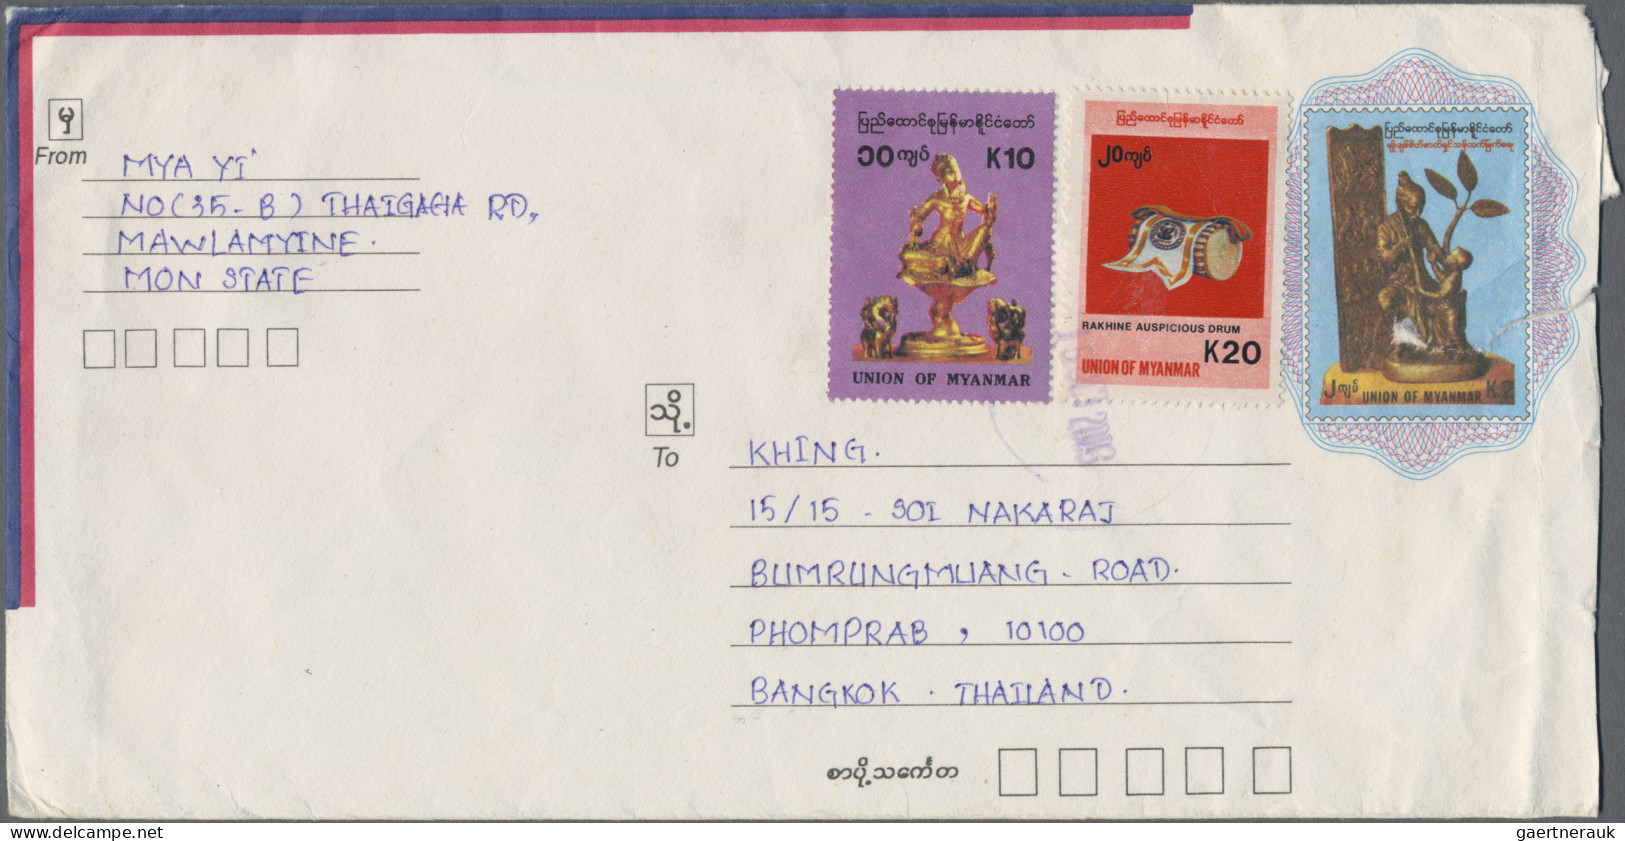 Birma - postal stationery: 1906/1970's: Collection of 64 postal stationery cards